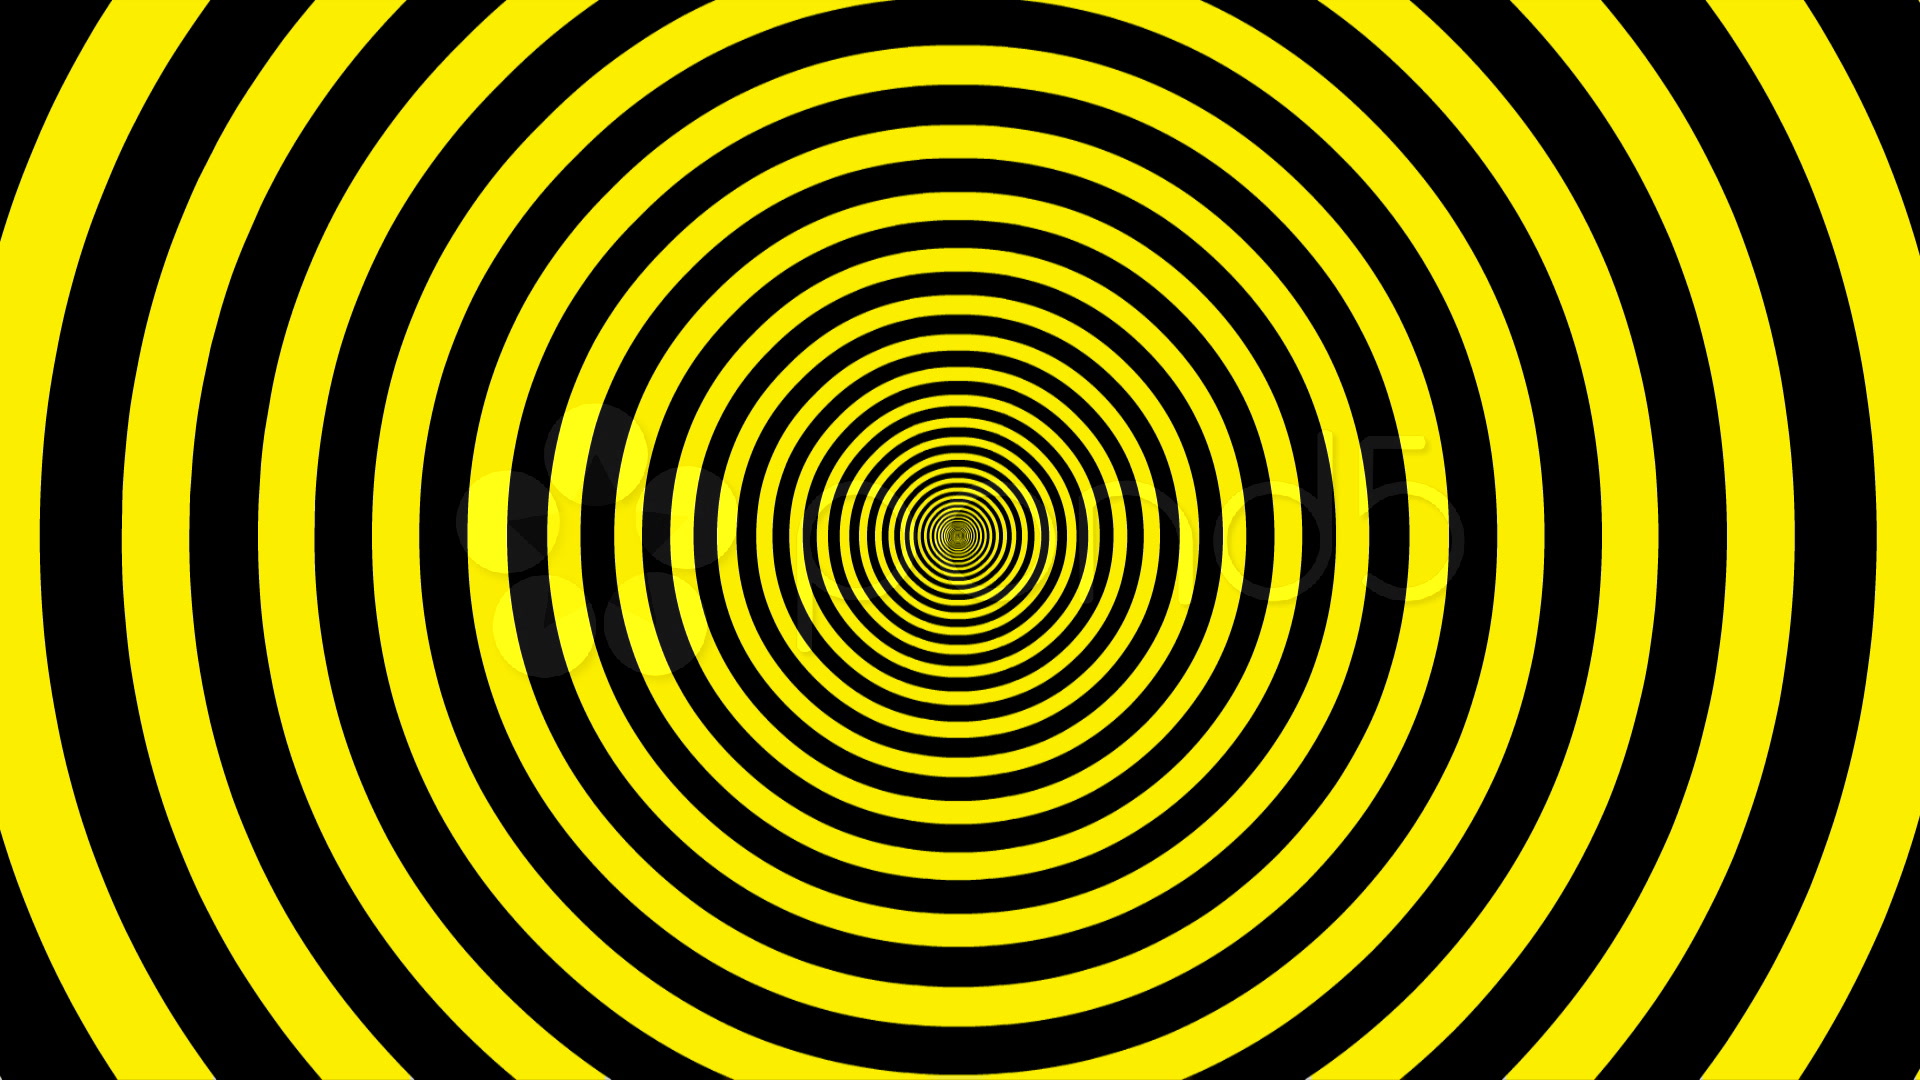 Target Tunnel Retro Spiral Animation Loop - Yellow & Black ~ Video ...